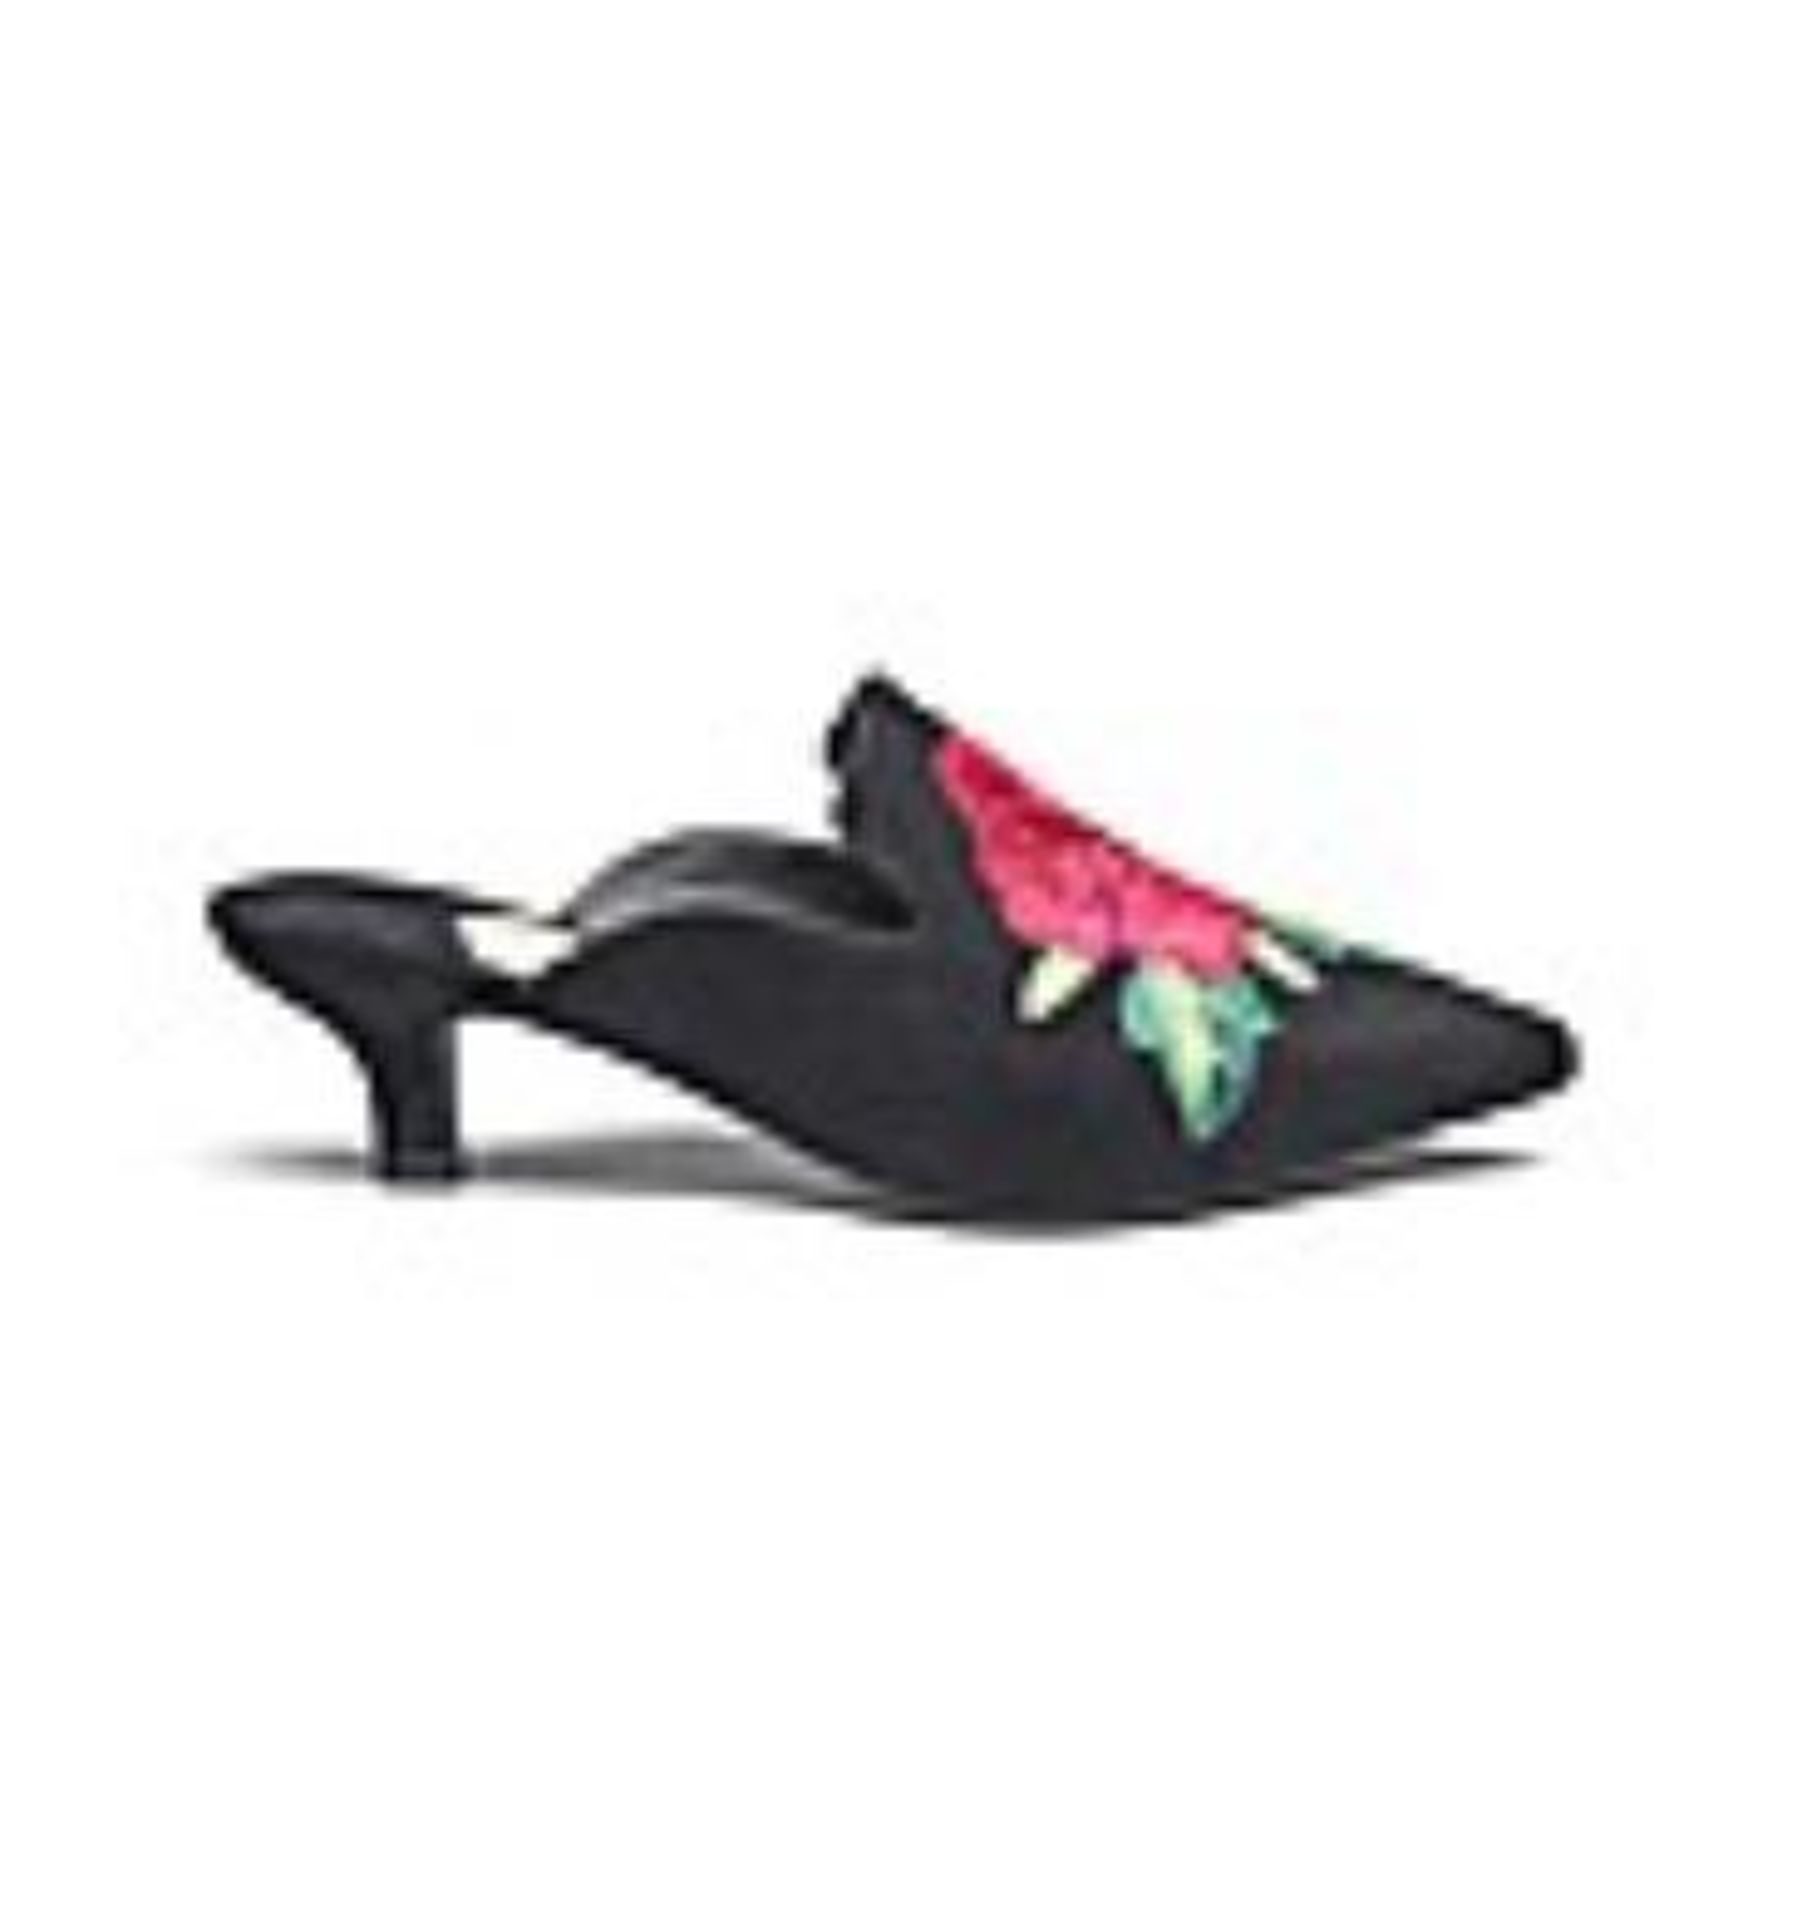 + VAT Brand New Pair Ladies Black EEE Fit Shoes Size 4 - Image 2 of 2